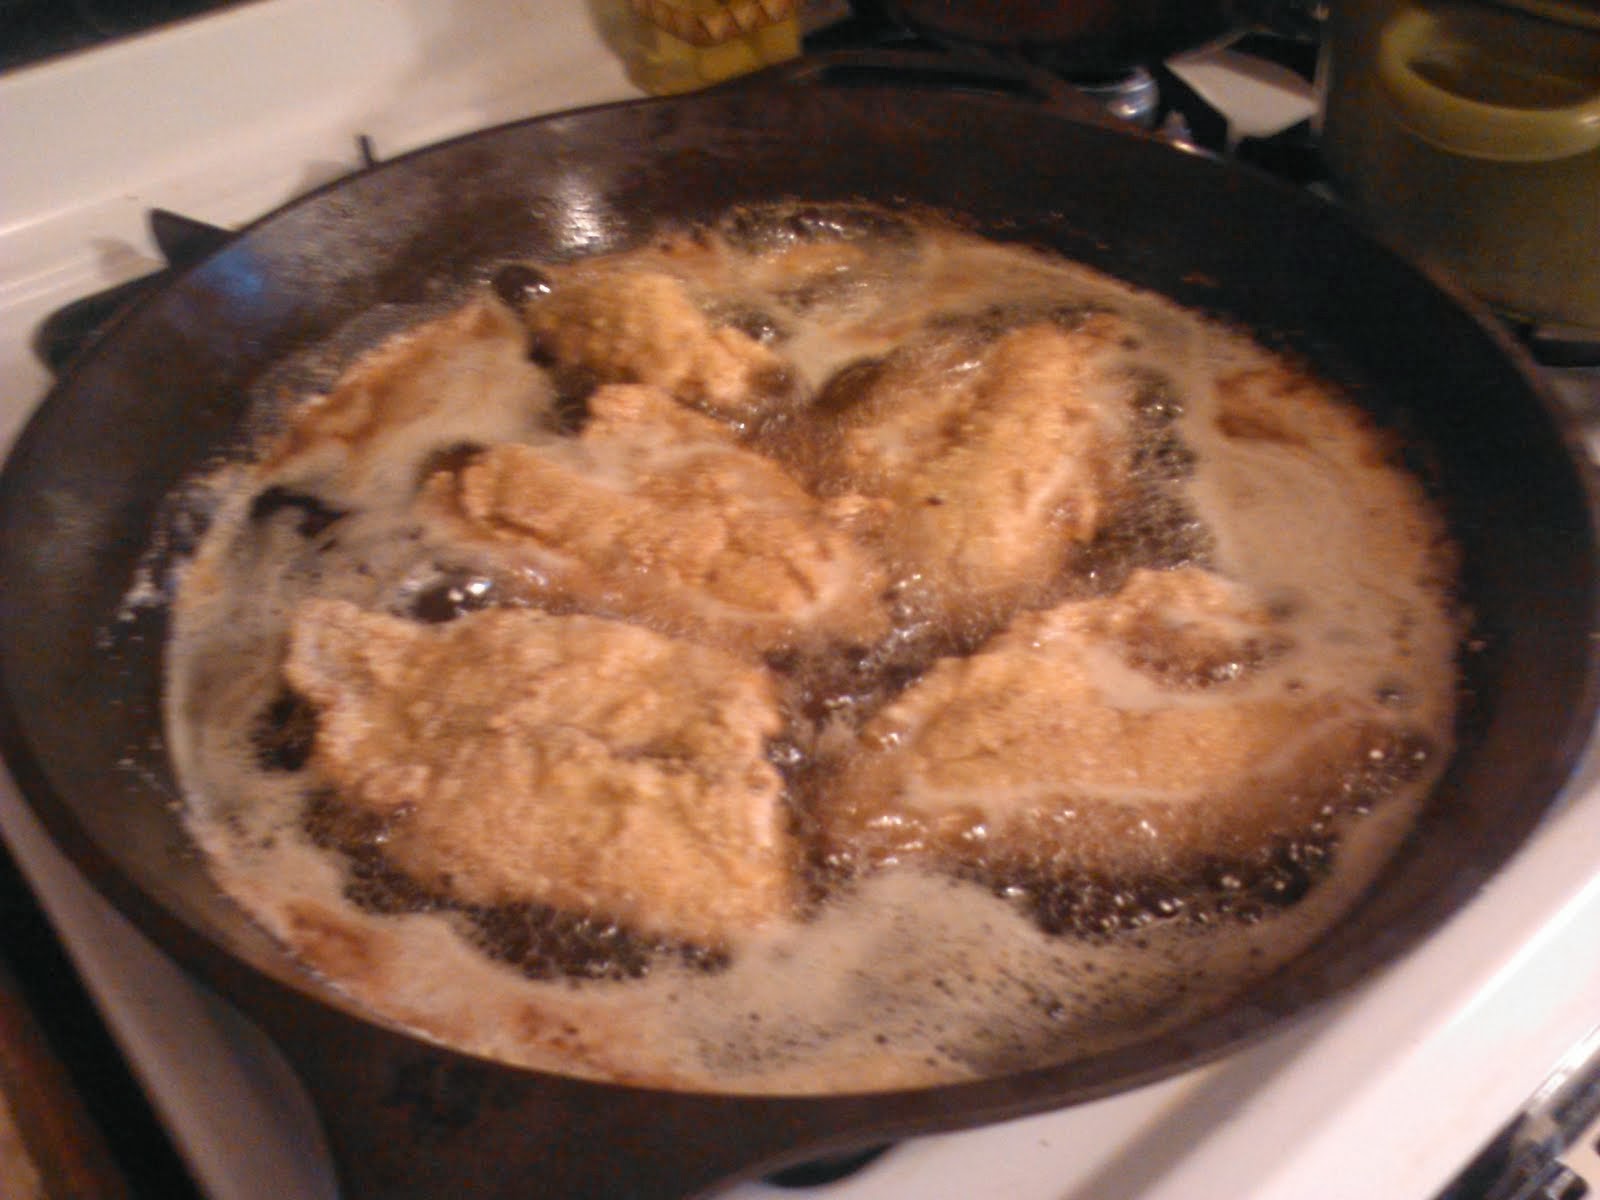 fish fry in the pan...yummo